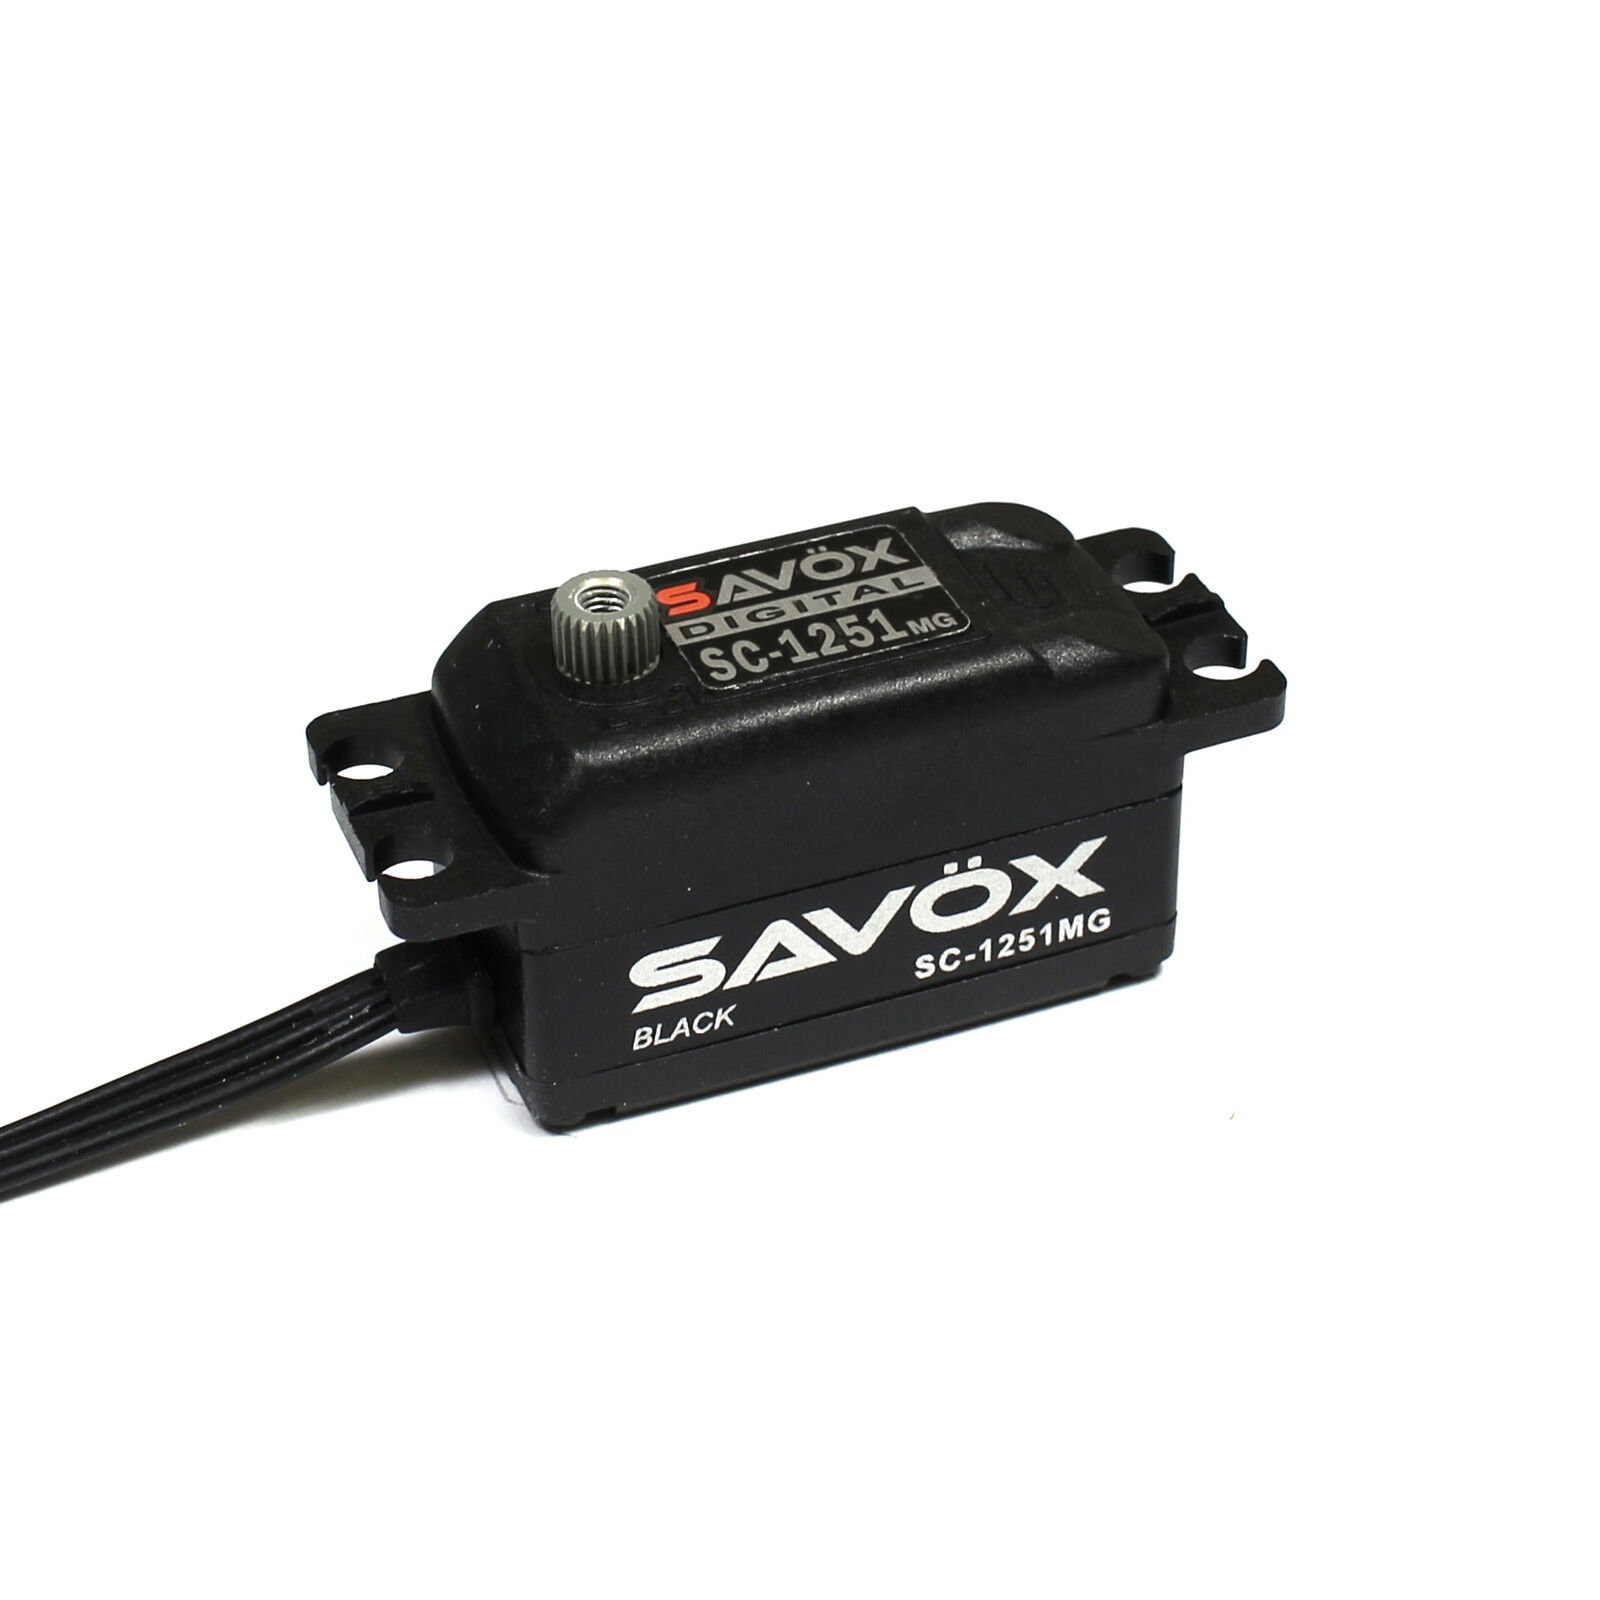 Savox 1251MG Black Edition Low Profile Digital Servo